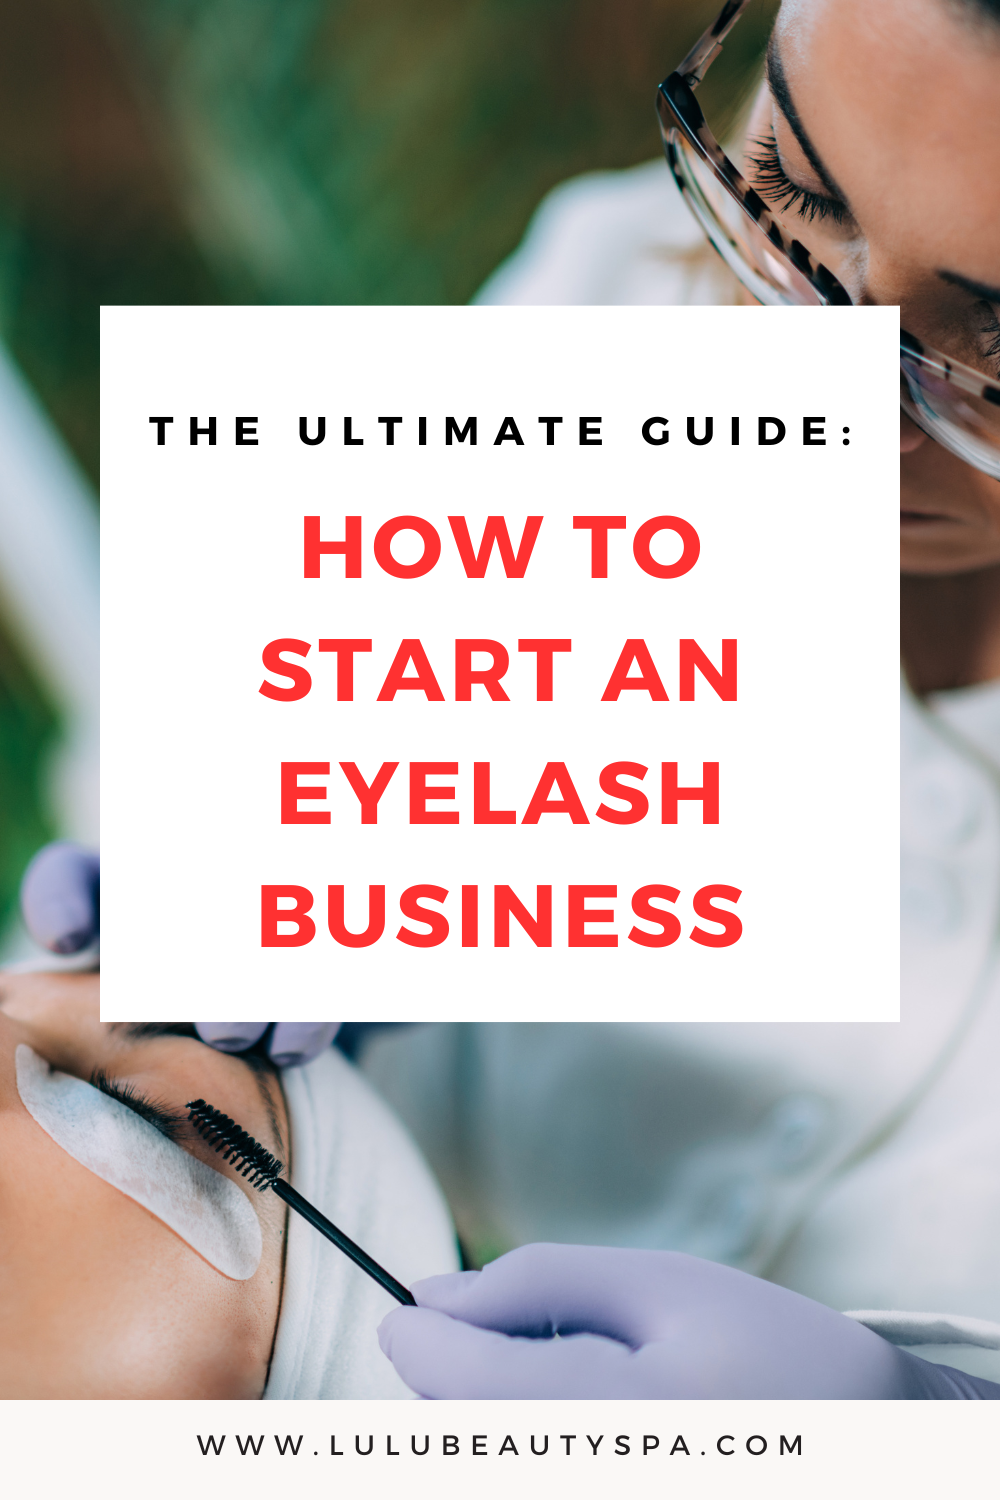 How to Start an Eyelash Business